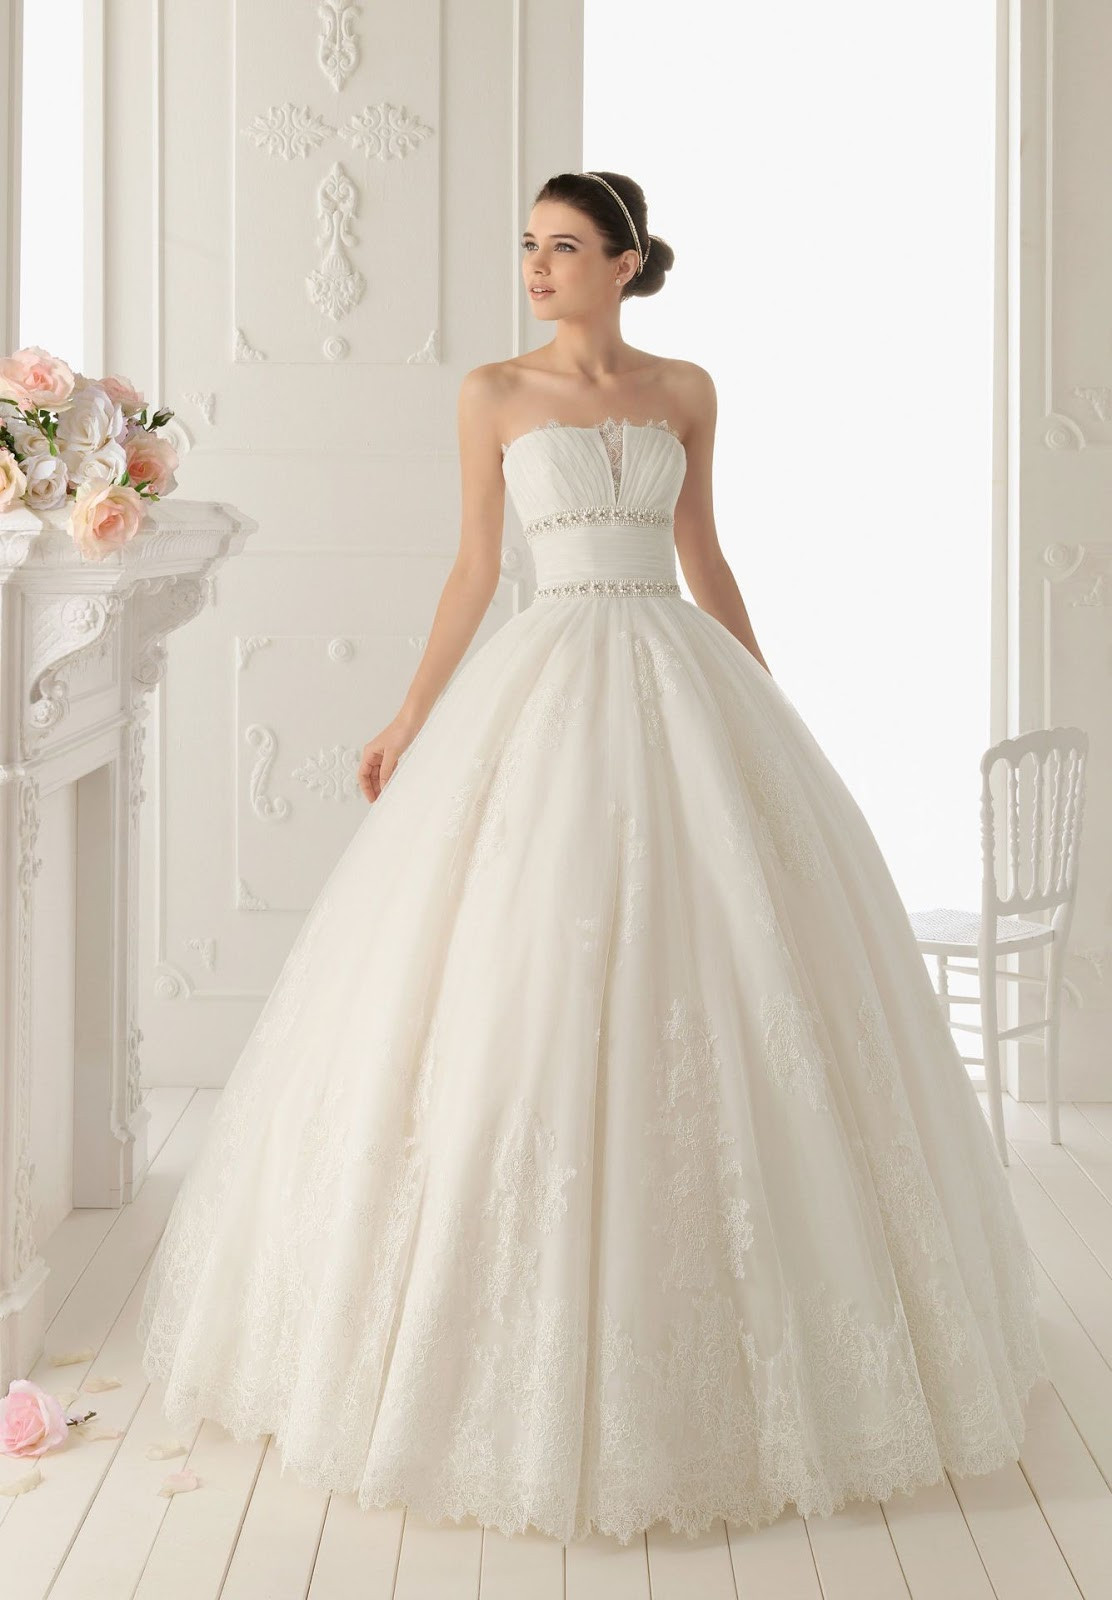 Elegant Wedding Gown
 WhiteAzalea Ball Gowns Lace Ball Gown Wedding Dress